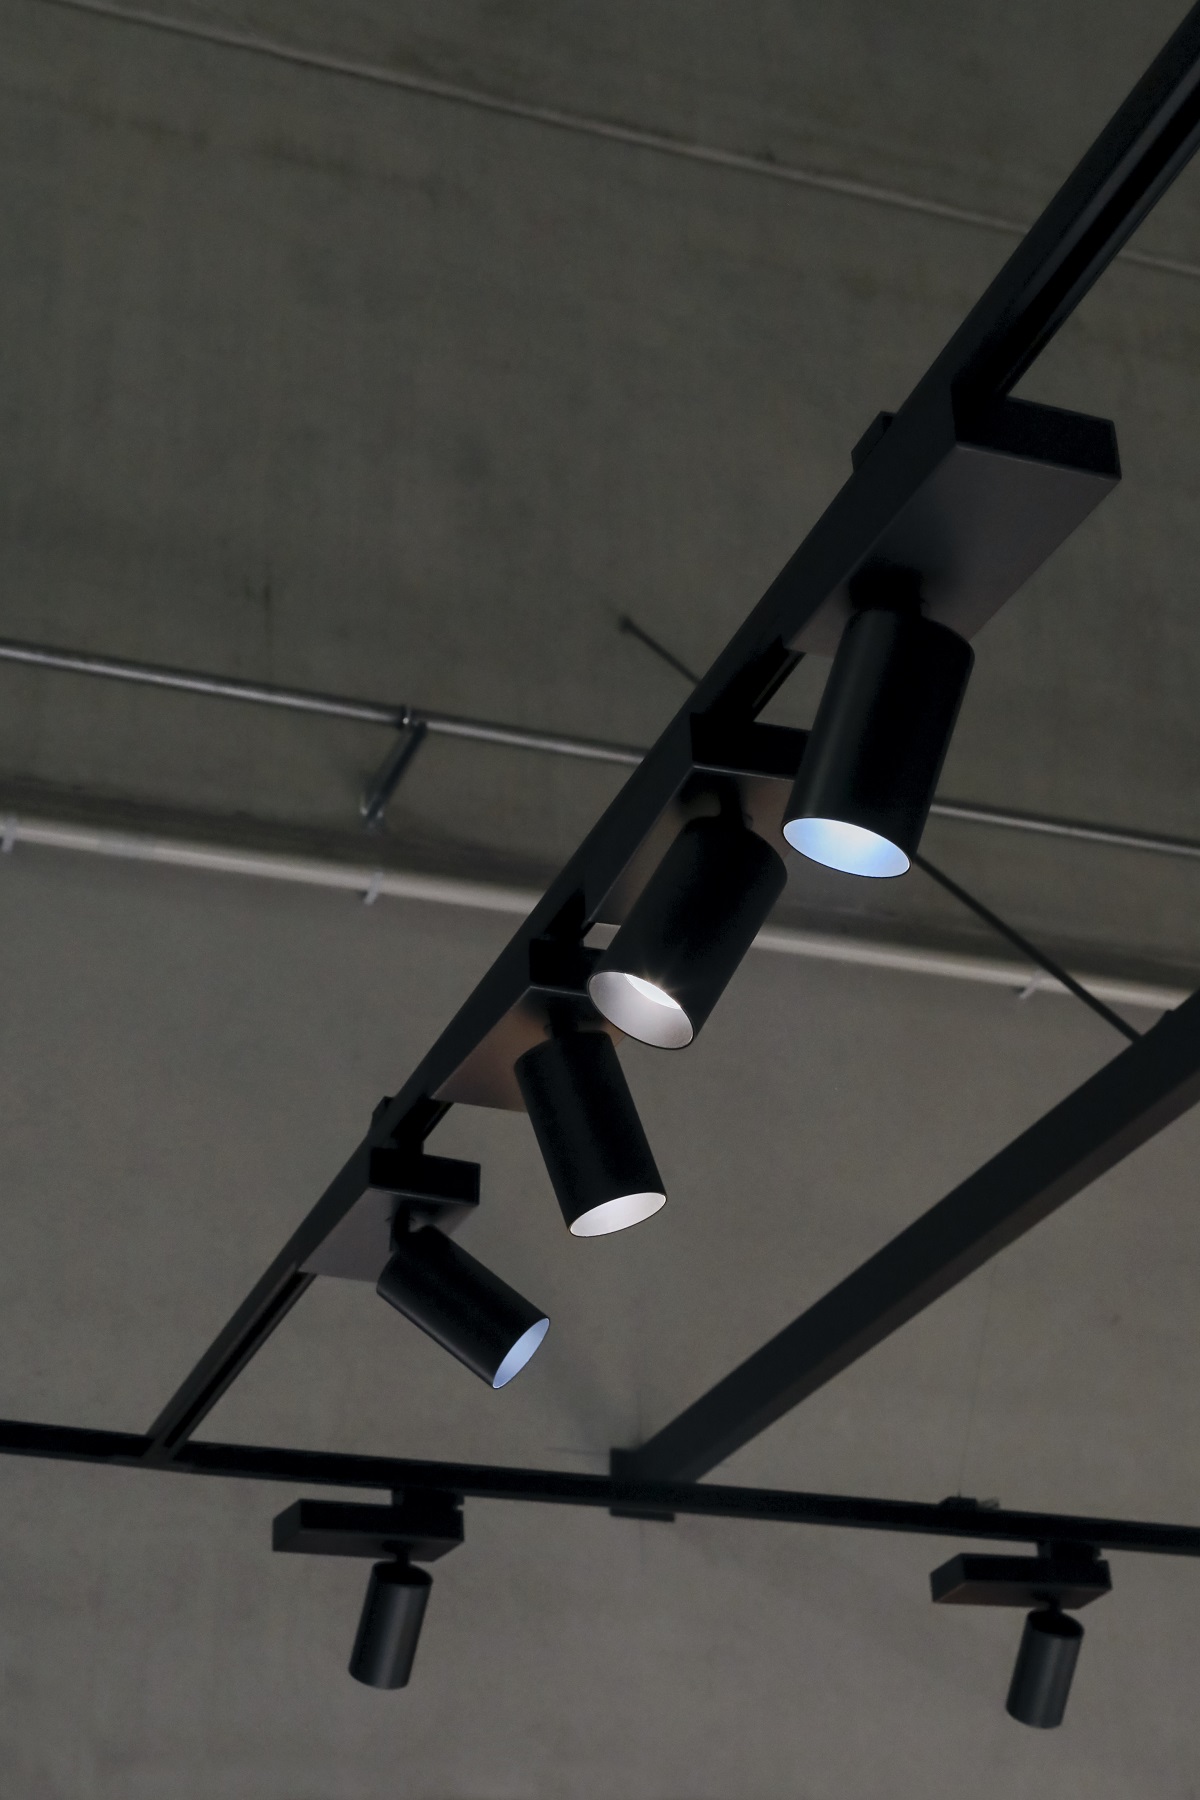 atom spotlights used in the gallery